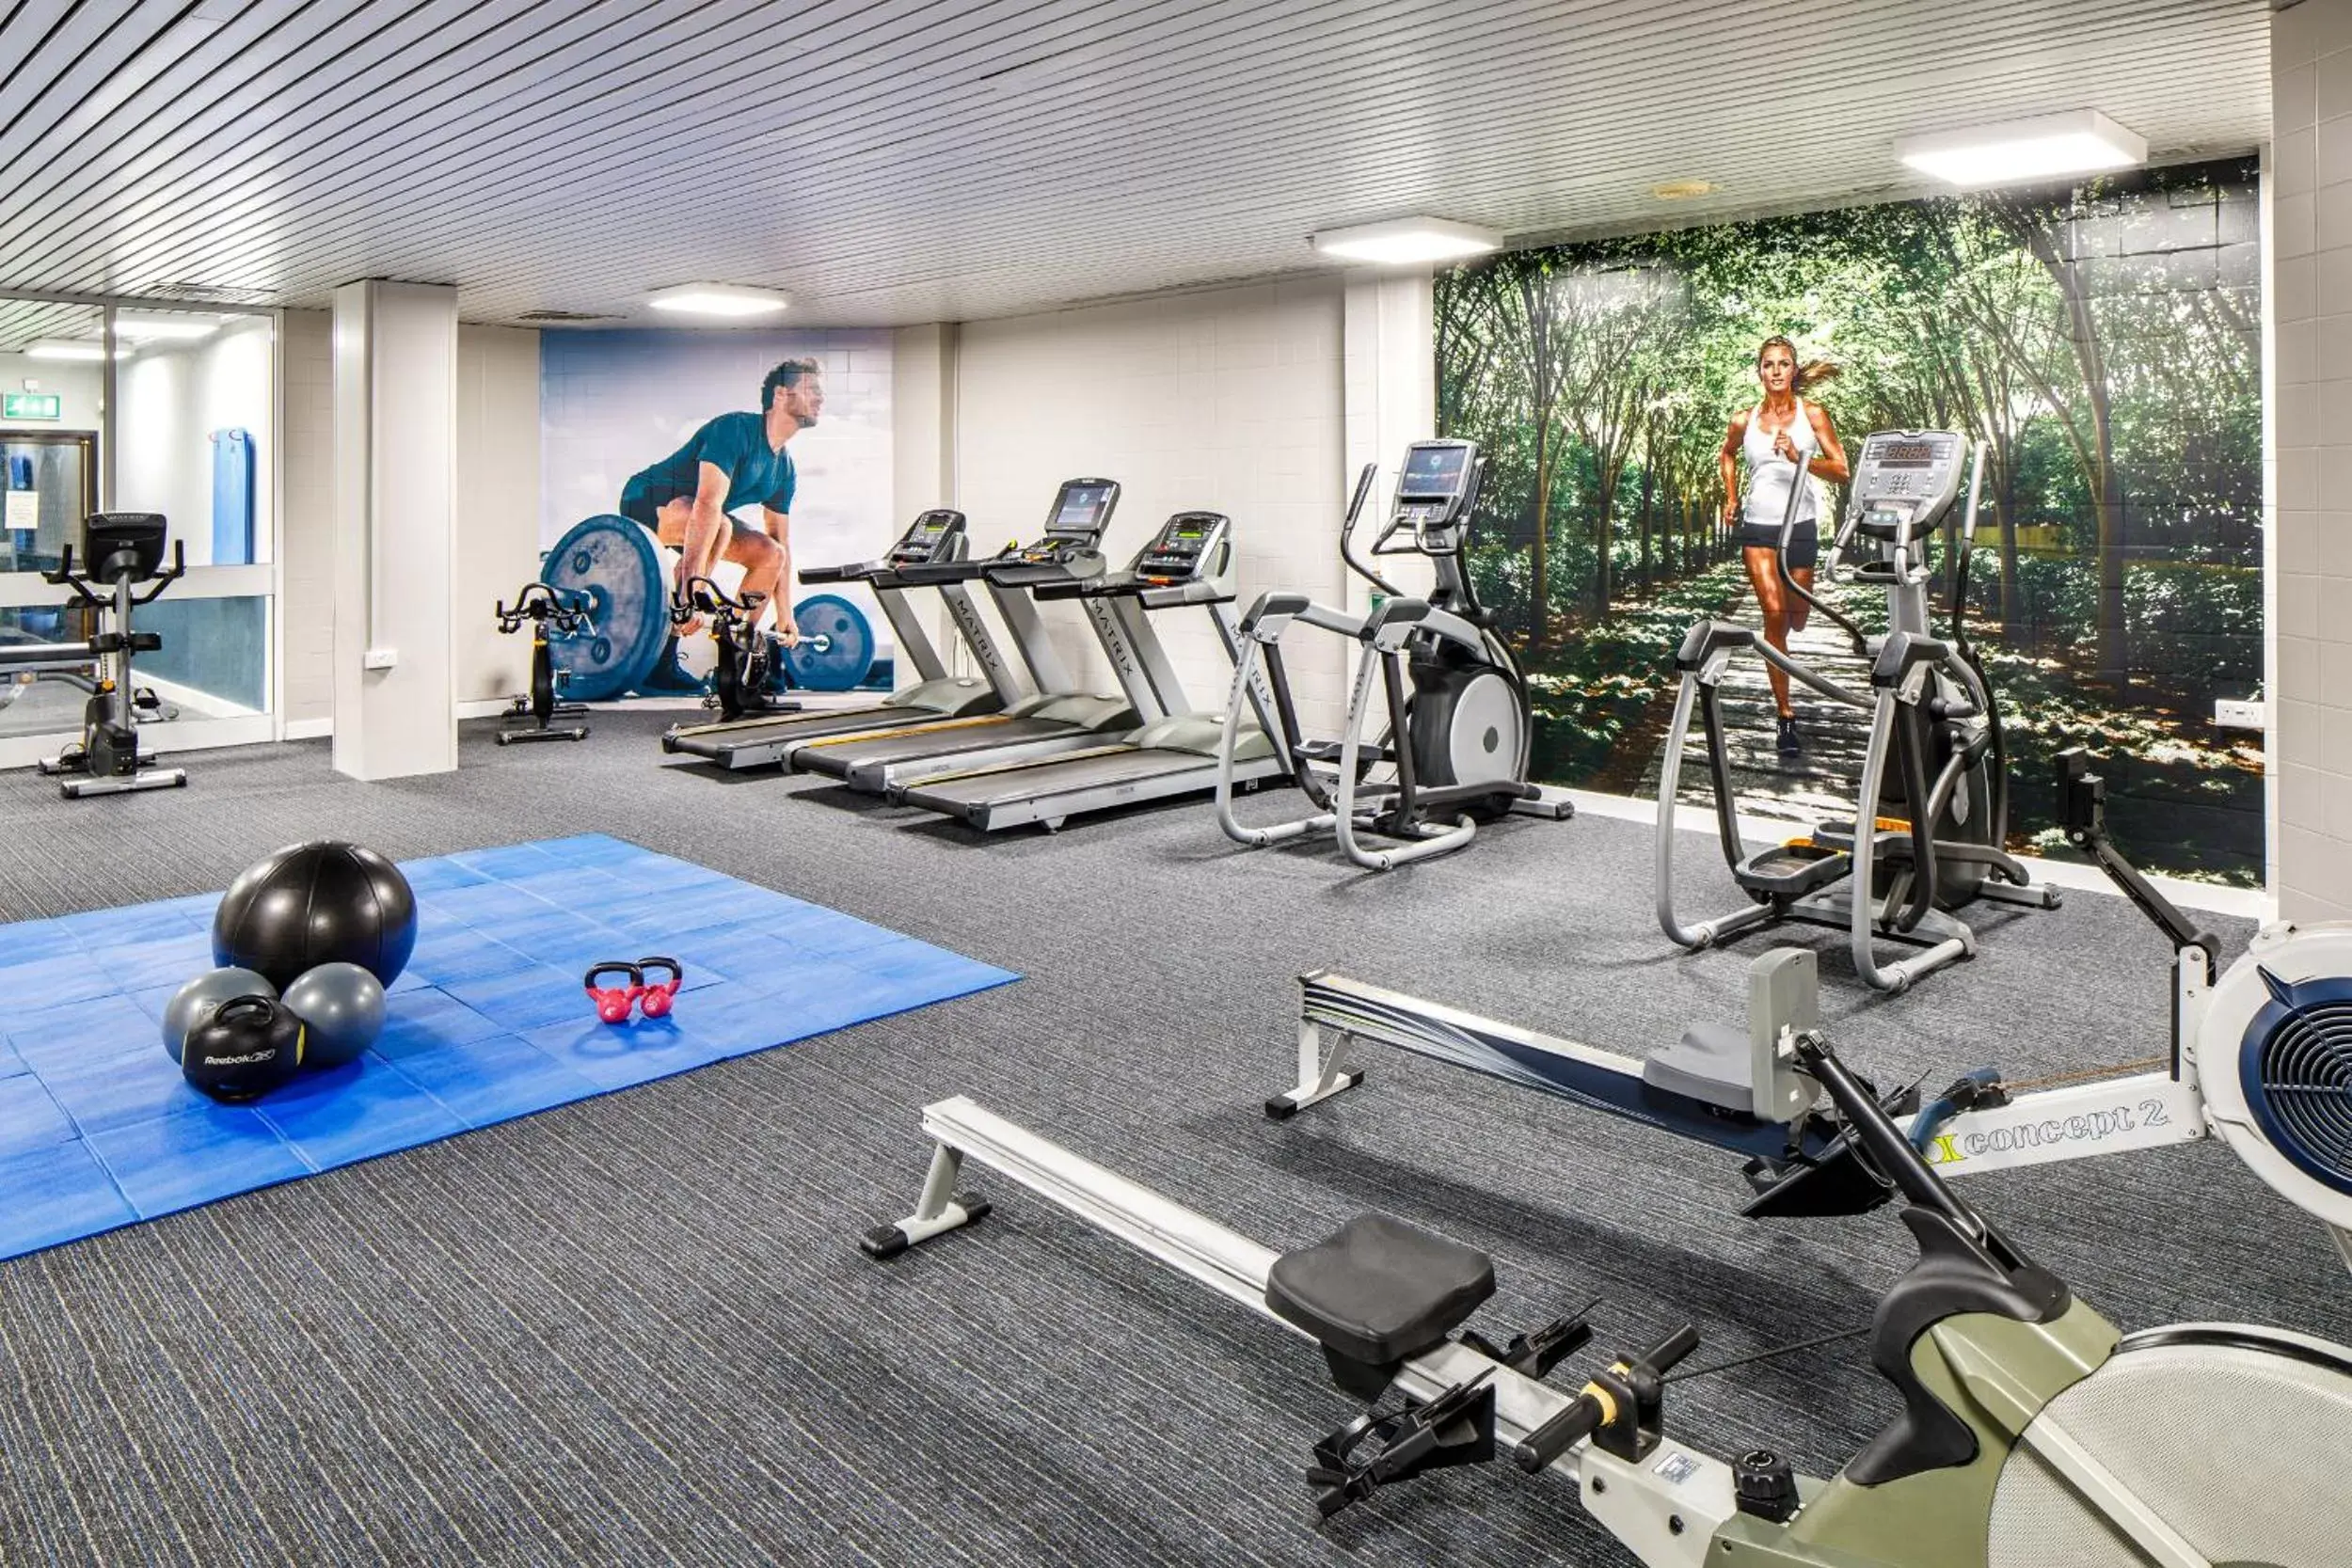 Fitness centre/facilities, Fitness Center/Facilities in Mercure Swansea Hotel